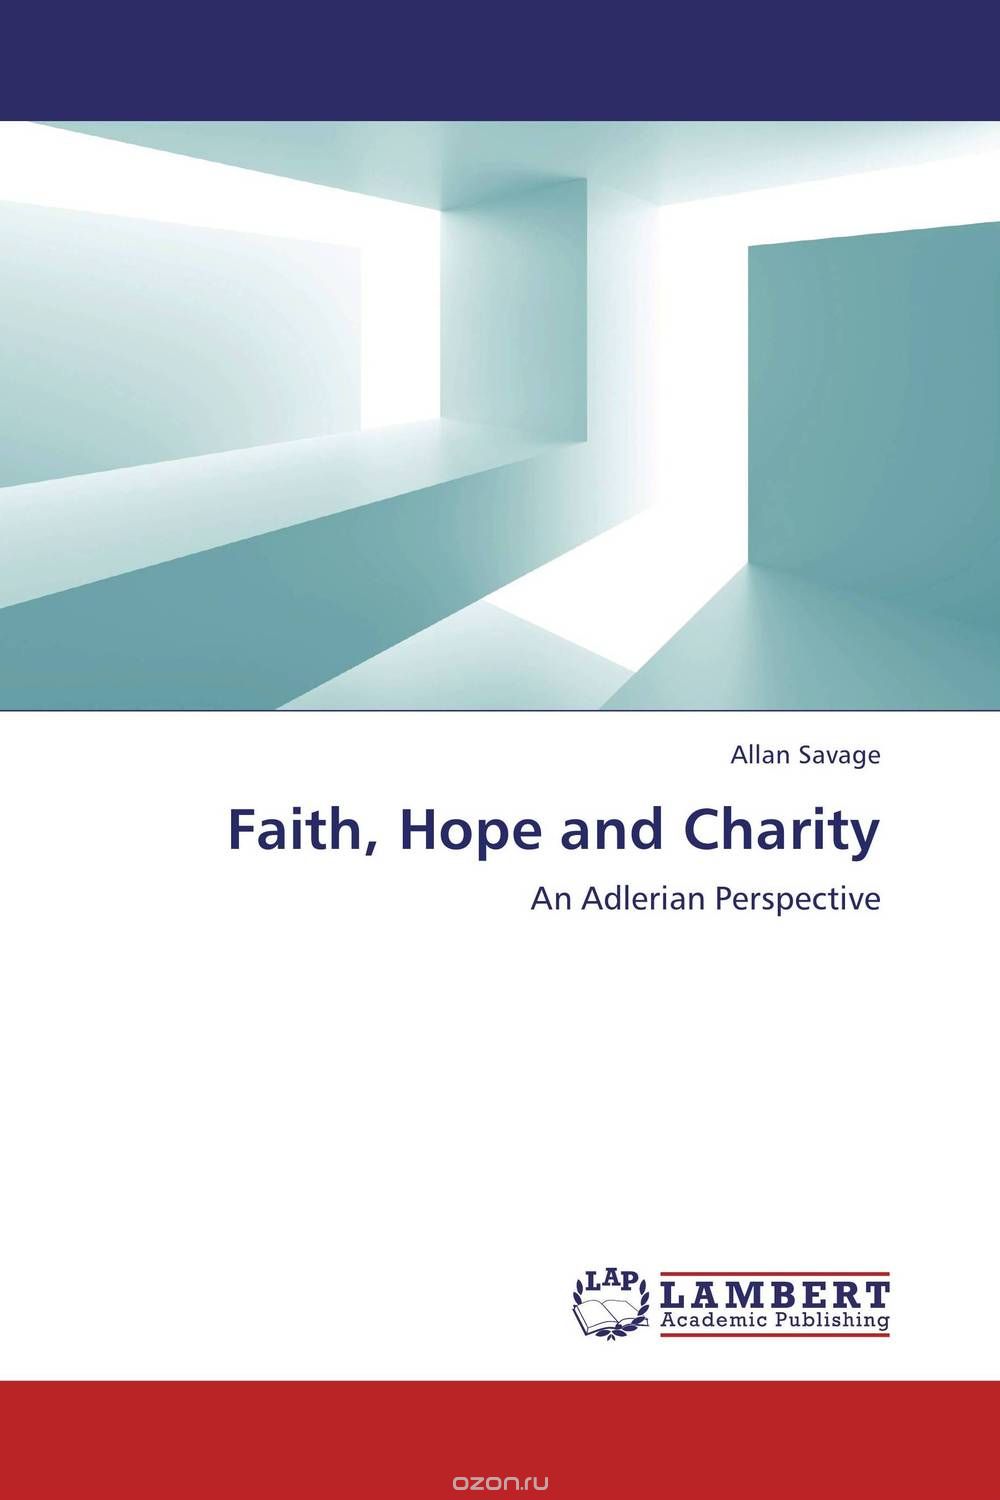 Скачать книгу "Faith, Hope and Charity"